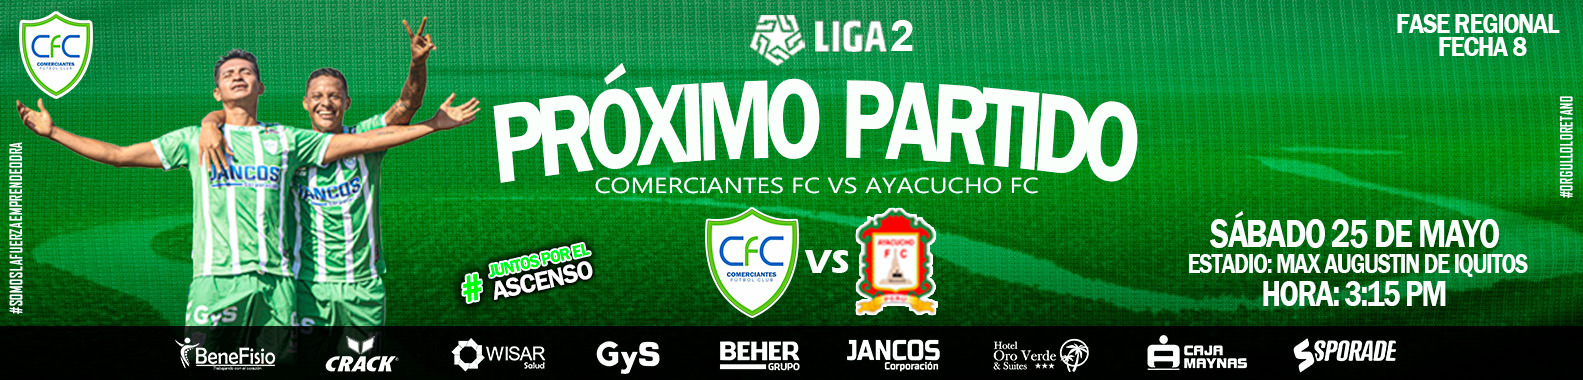 COMERCIANTES FC VS AYACUCHO FC - LIGA 2 FECHA 08